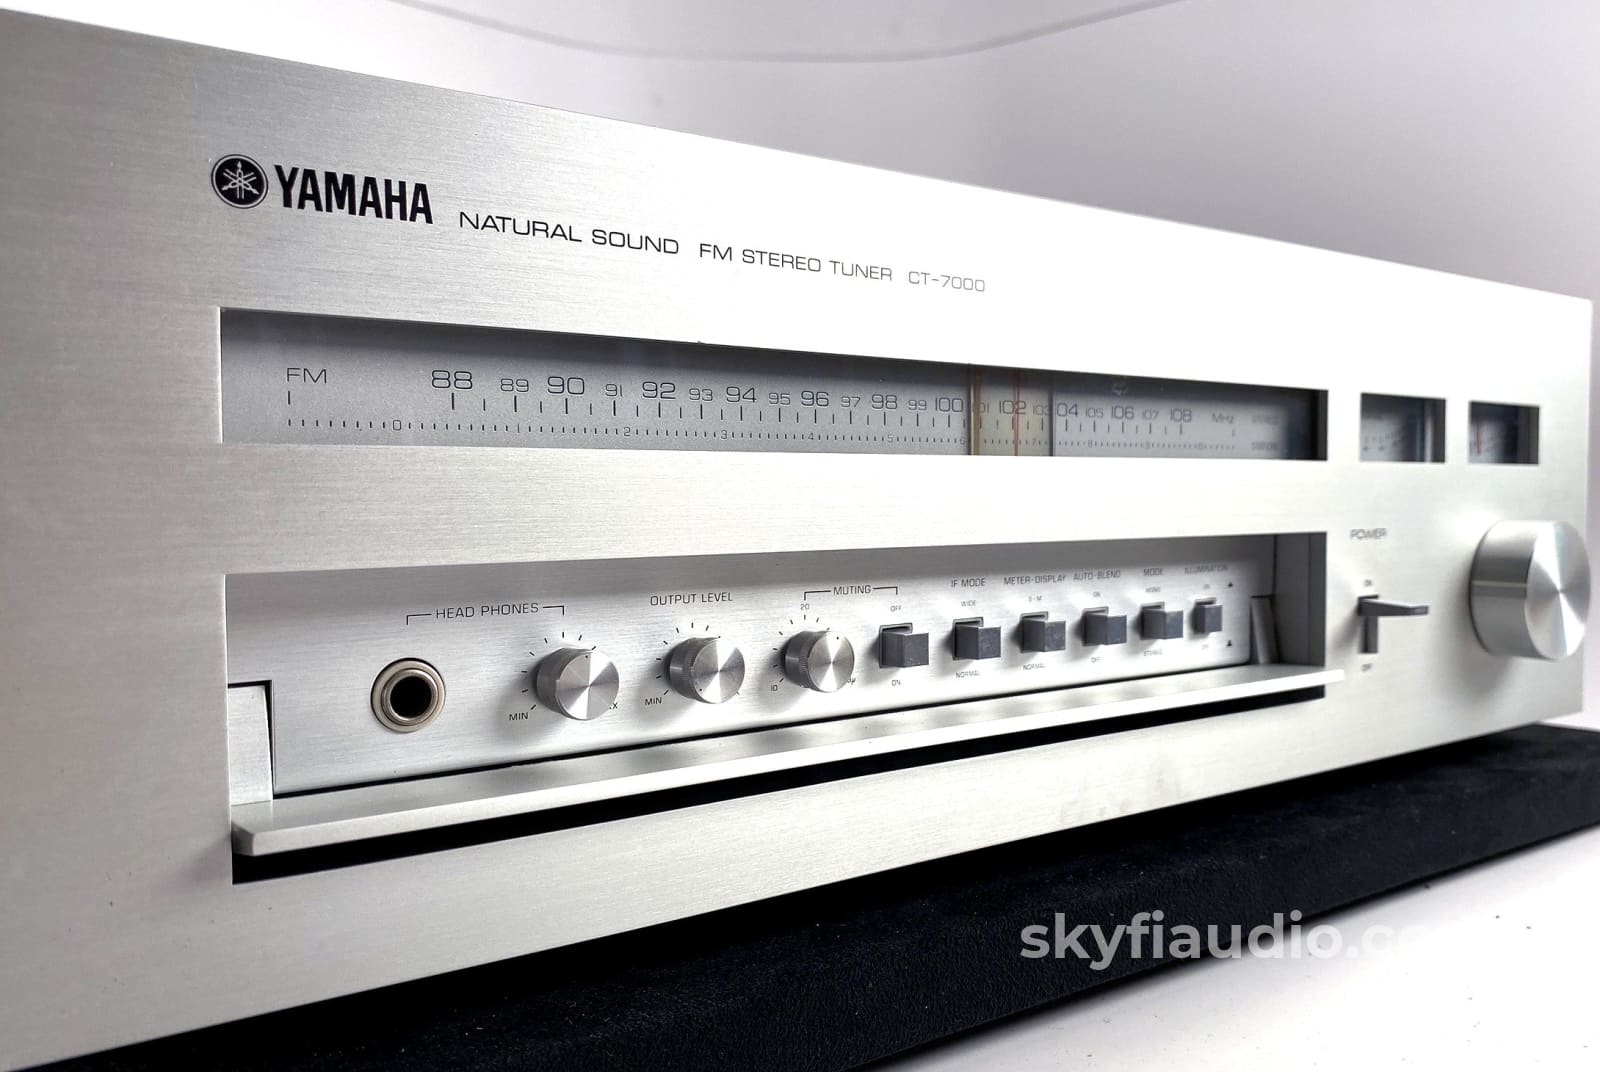 Yamaha Ct-7000 Fm Tuner - Legendary Build Quality And Performance